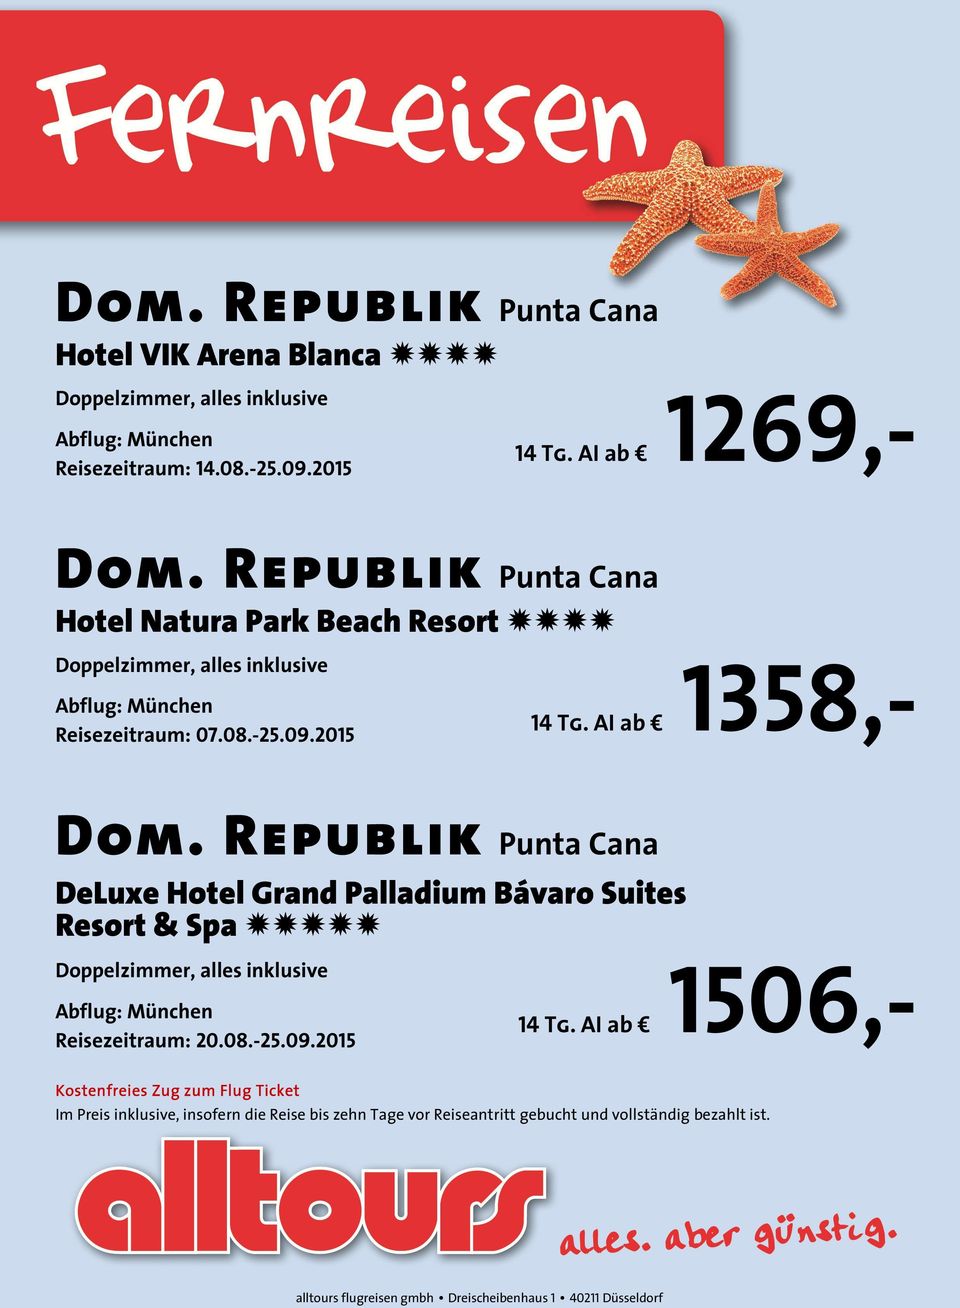 Republik Punta Cana DeLuxe Hotel Grand Palladium Bávaro Suites Resort & Spa NNNNN Reisezeitraum: 20.08.-25.09.2015 14 Tg.